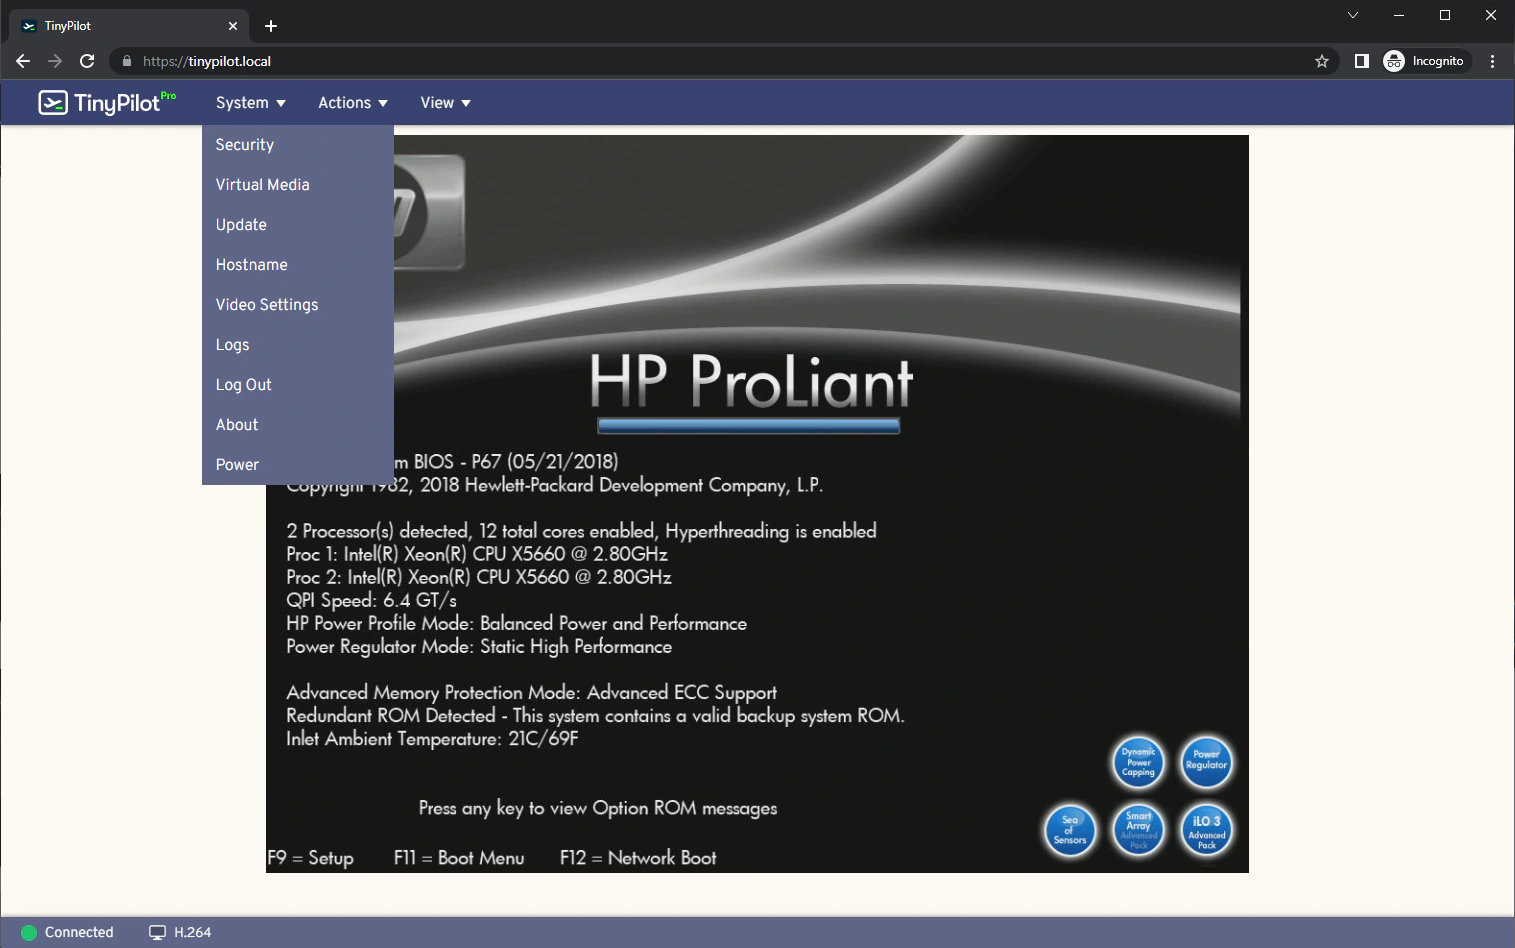 Screenshot of TinyPilot Pro on an HP ProLiant BIOS screen